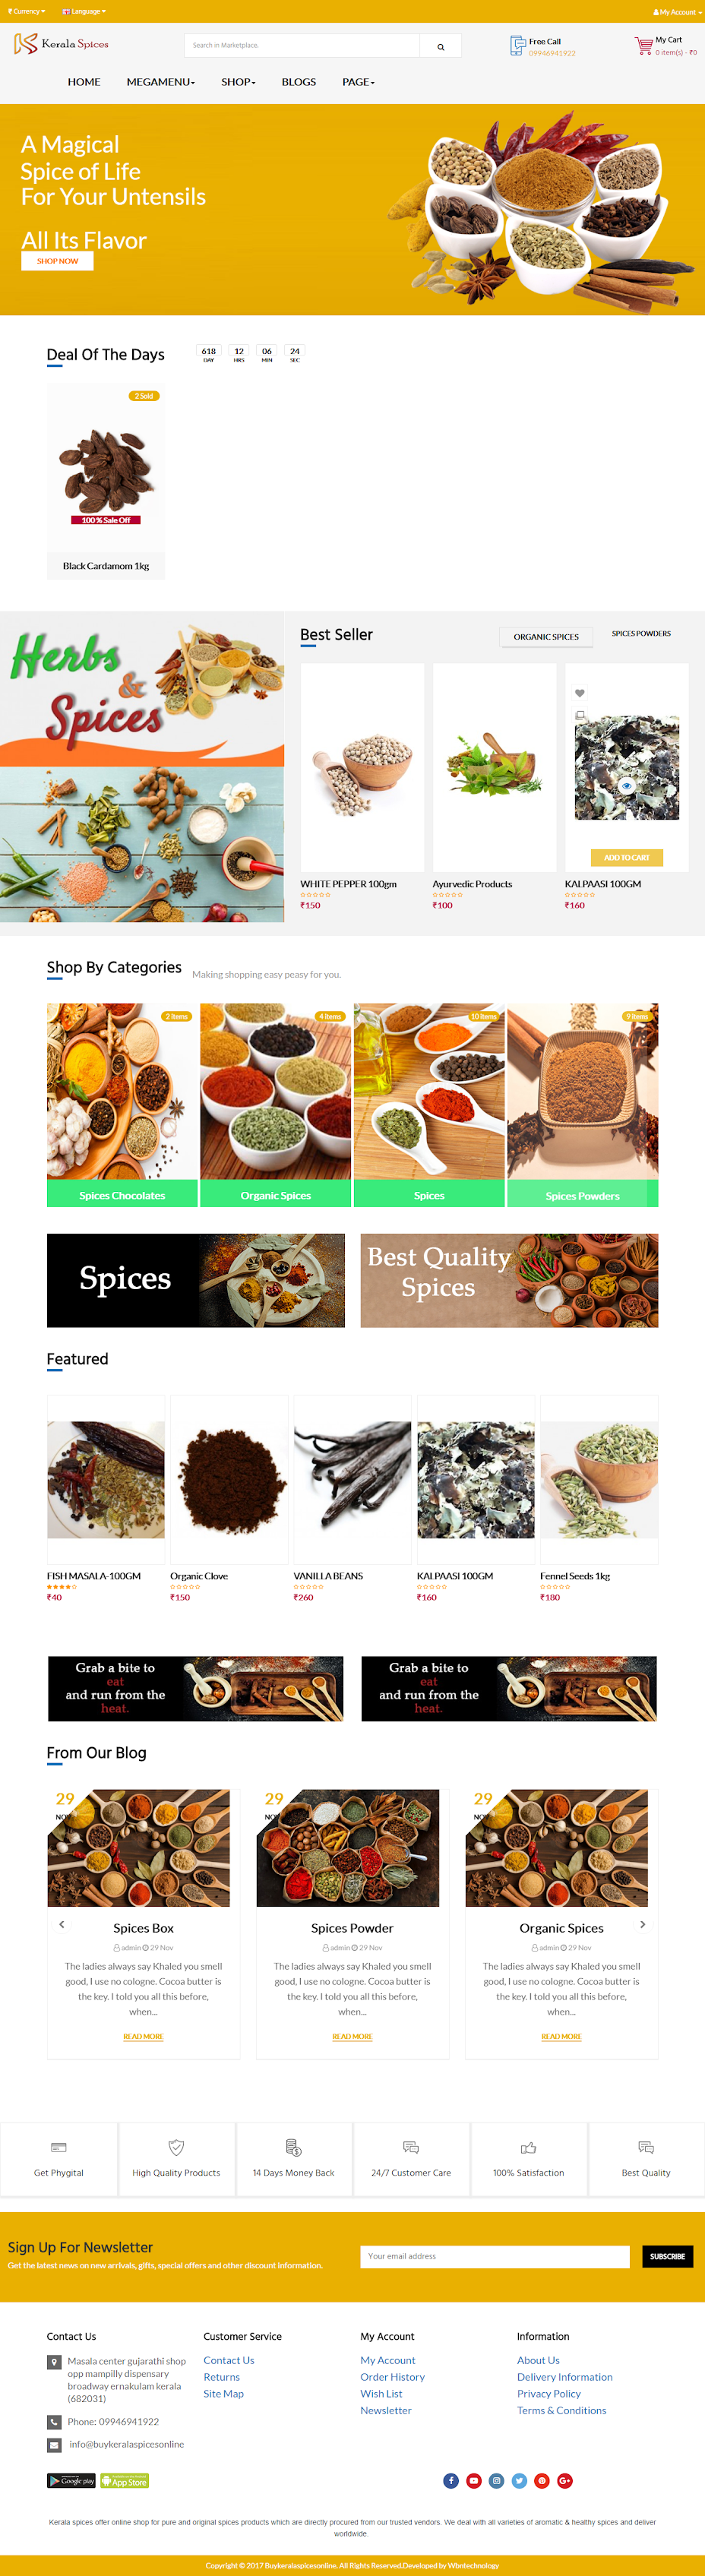 Buy Kerala Spices Online